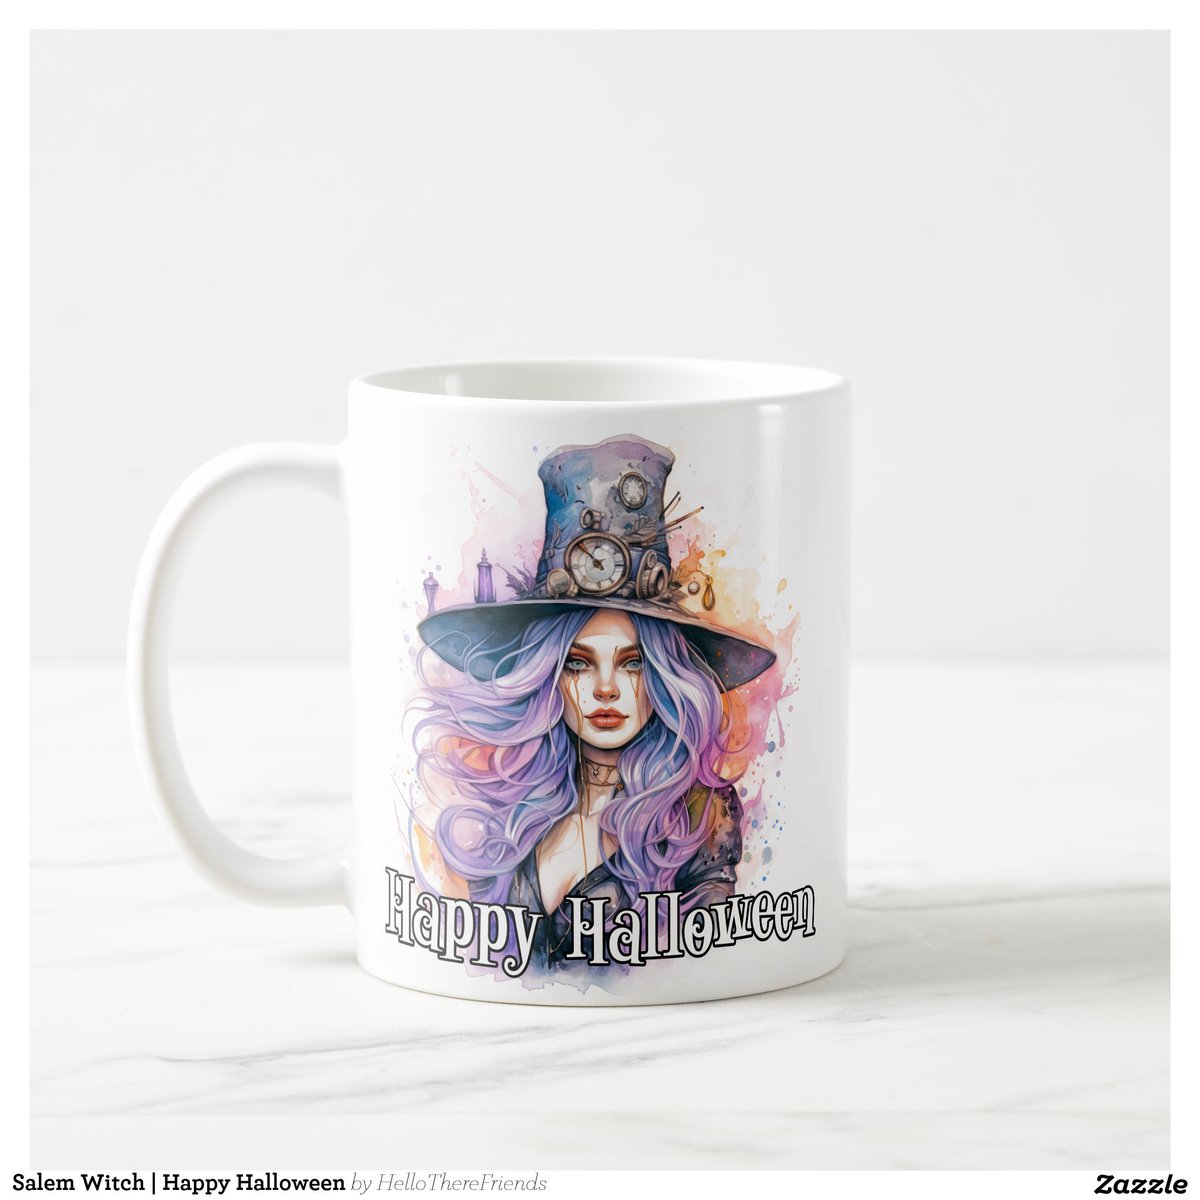 Salem Witch | Happy Halloween Coffee Mug→zazzle.com/z/a1c47bl7?rf=…

#HalloweenMugs #CoffeeMugs #Mugs #Halloween2024 #Witchy #Witches #HappyHalloween #Holidays #CoffeeDrinkers #Horror #GiftIdeas #Zazzle